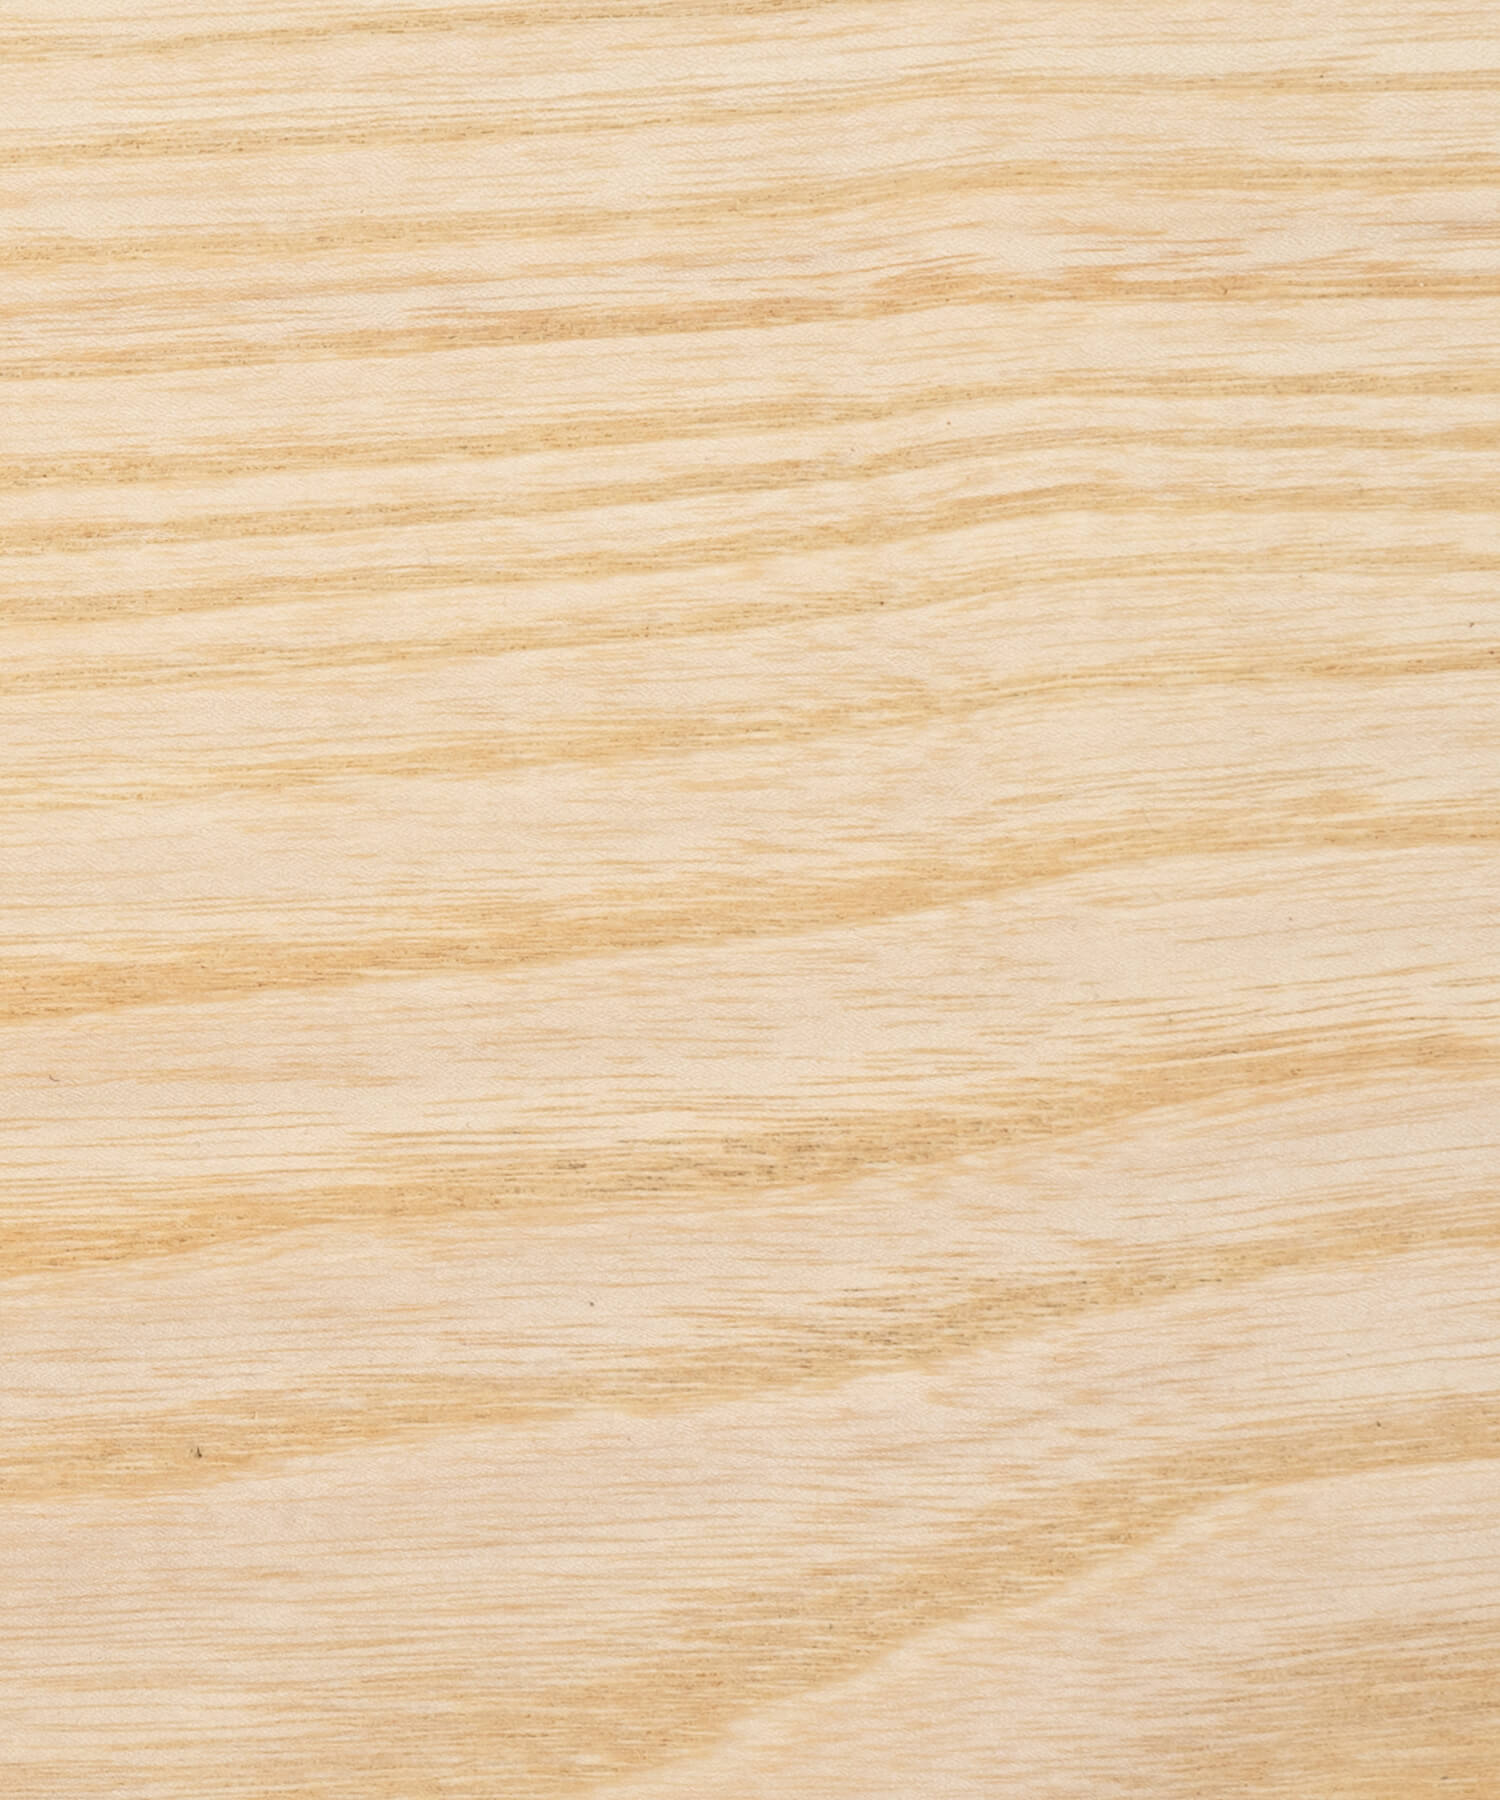 Oiled ash timber grain close up